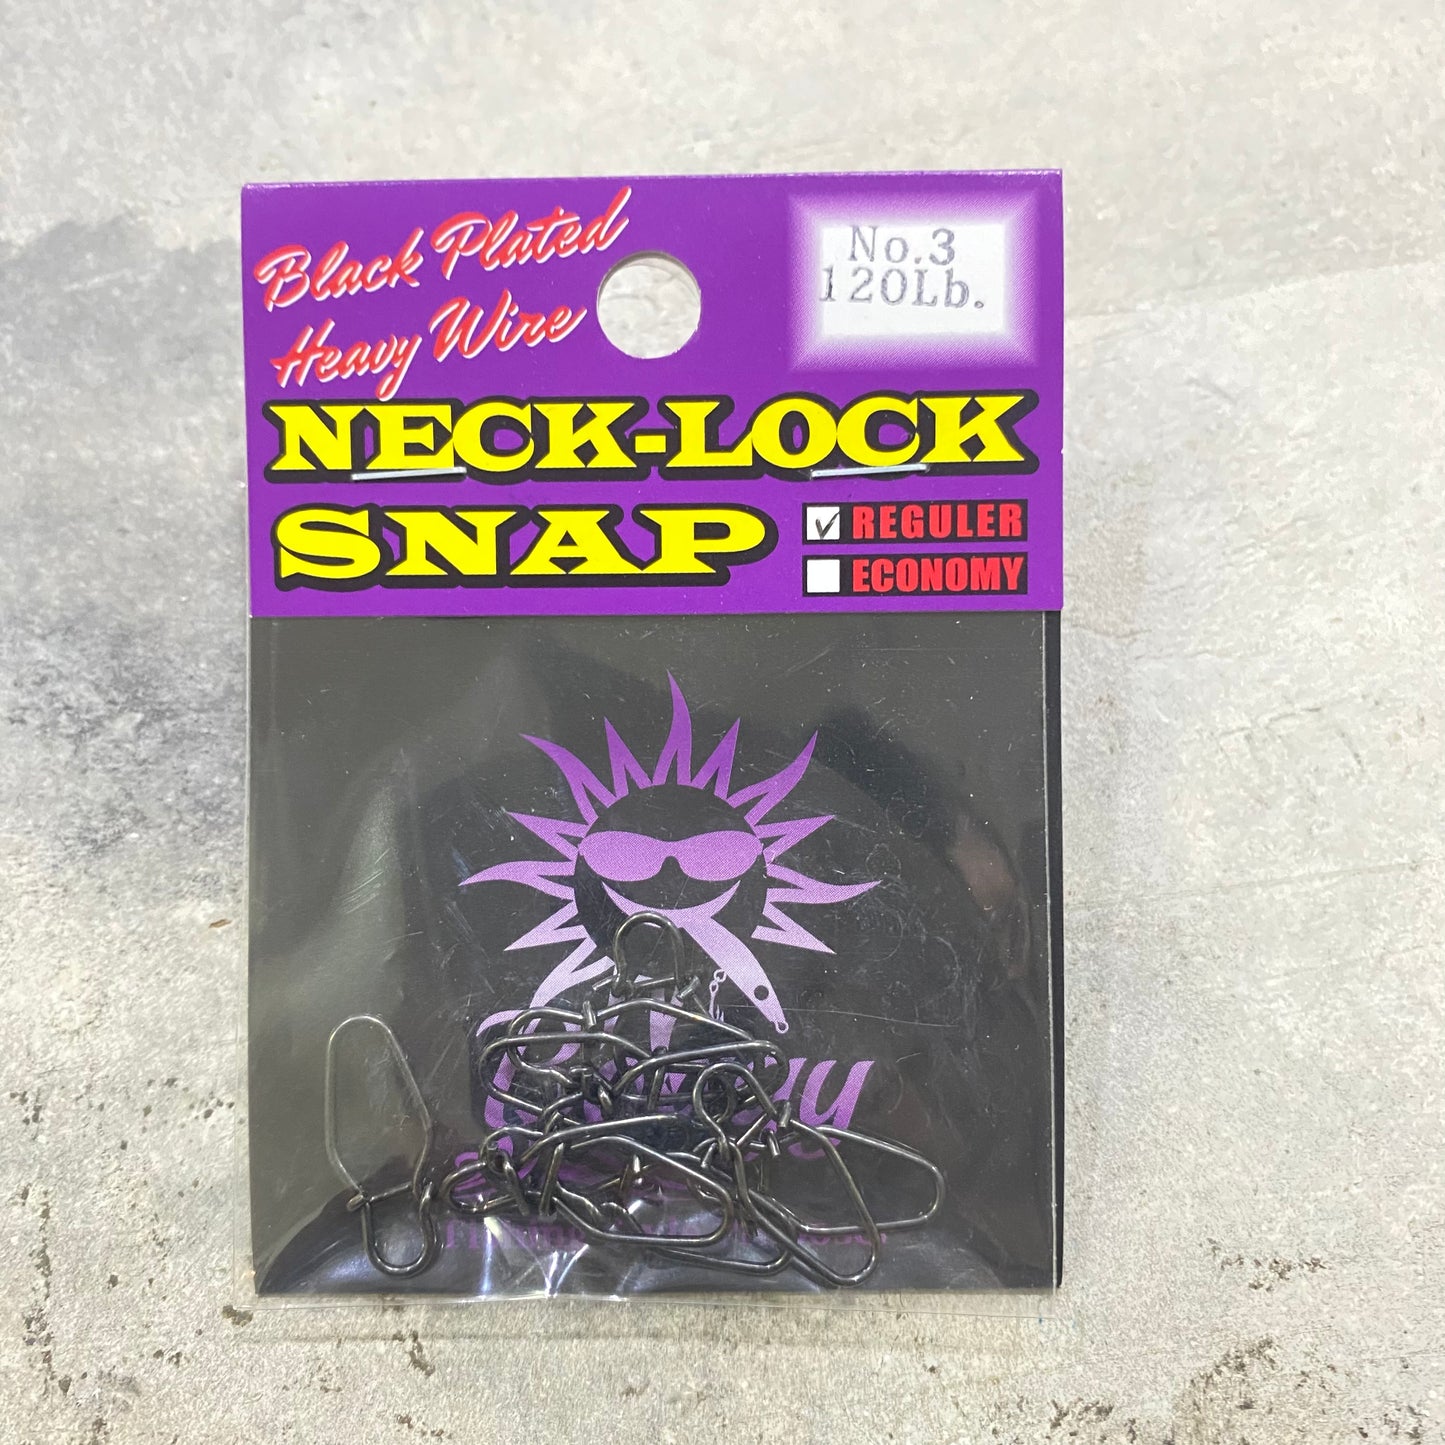 Neck-Lock Snap